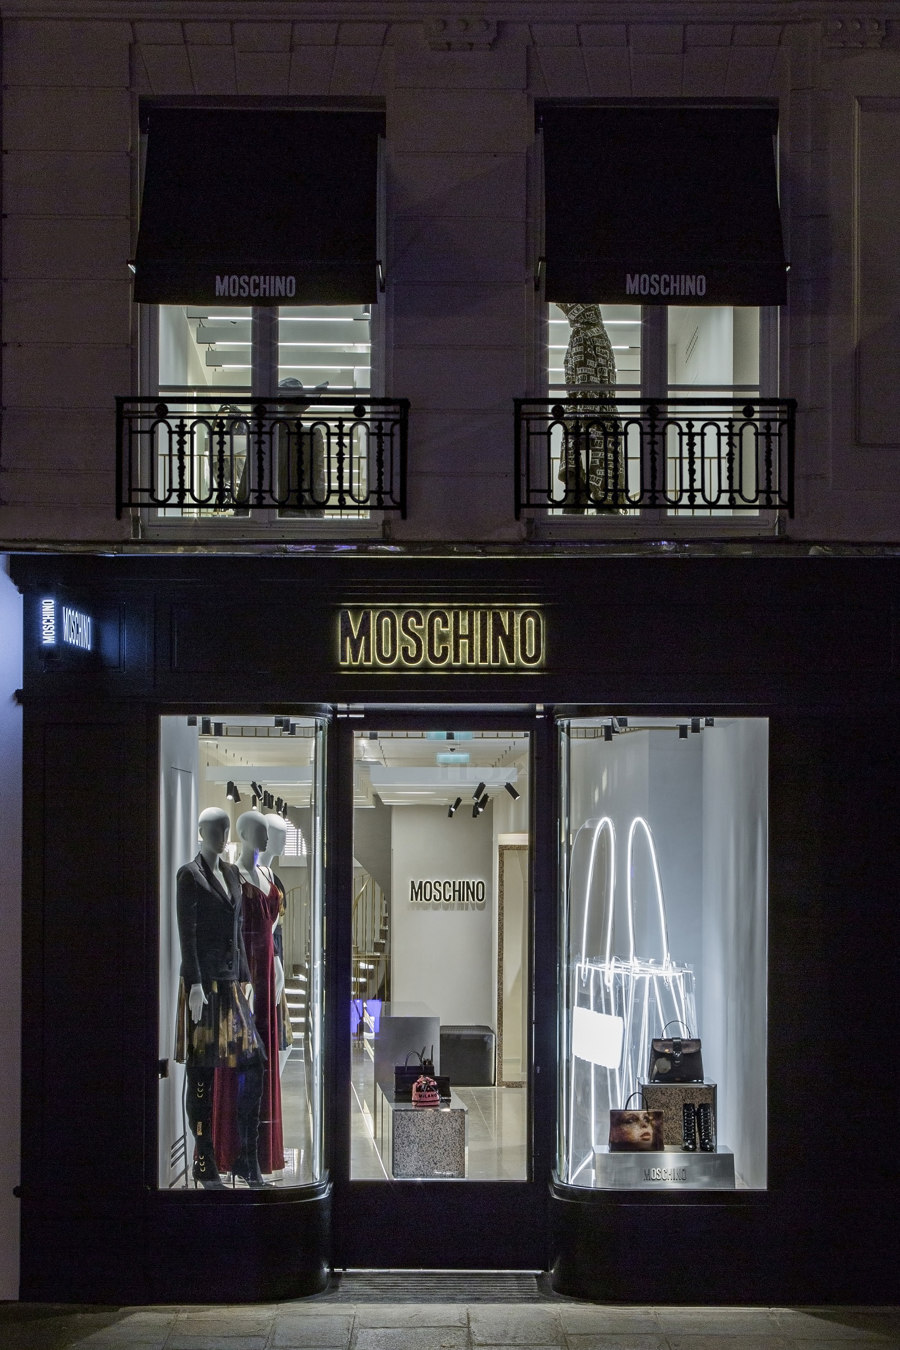 Moschino Showroom by Fabio Ferrillo | Shop interiors